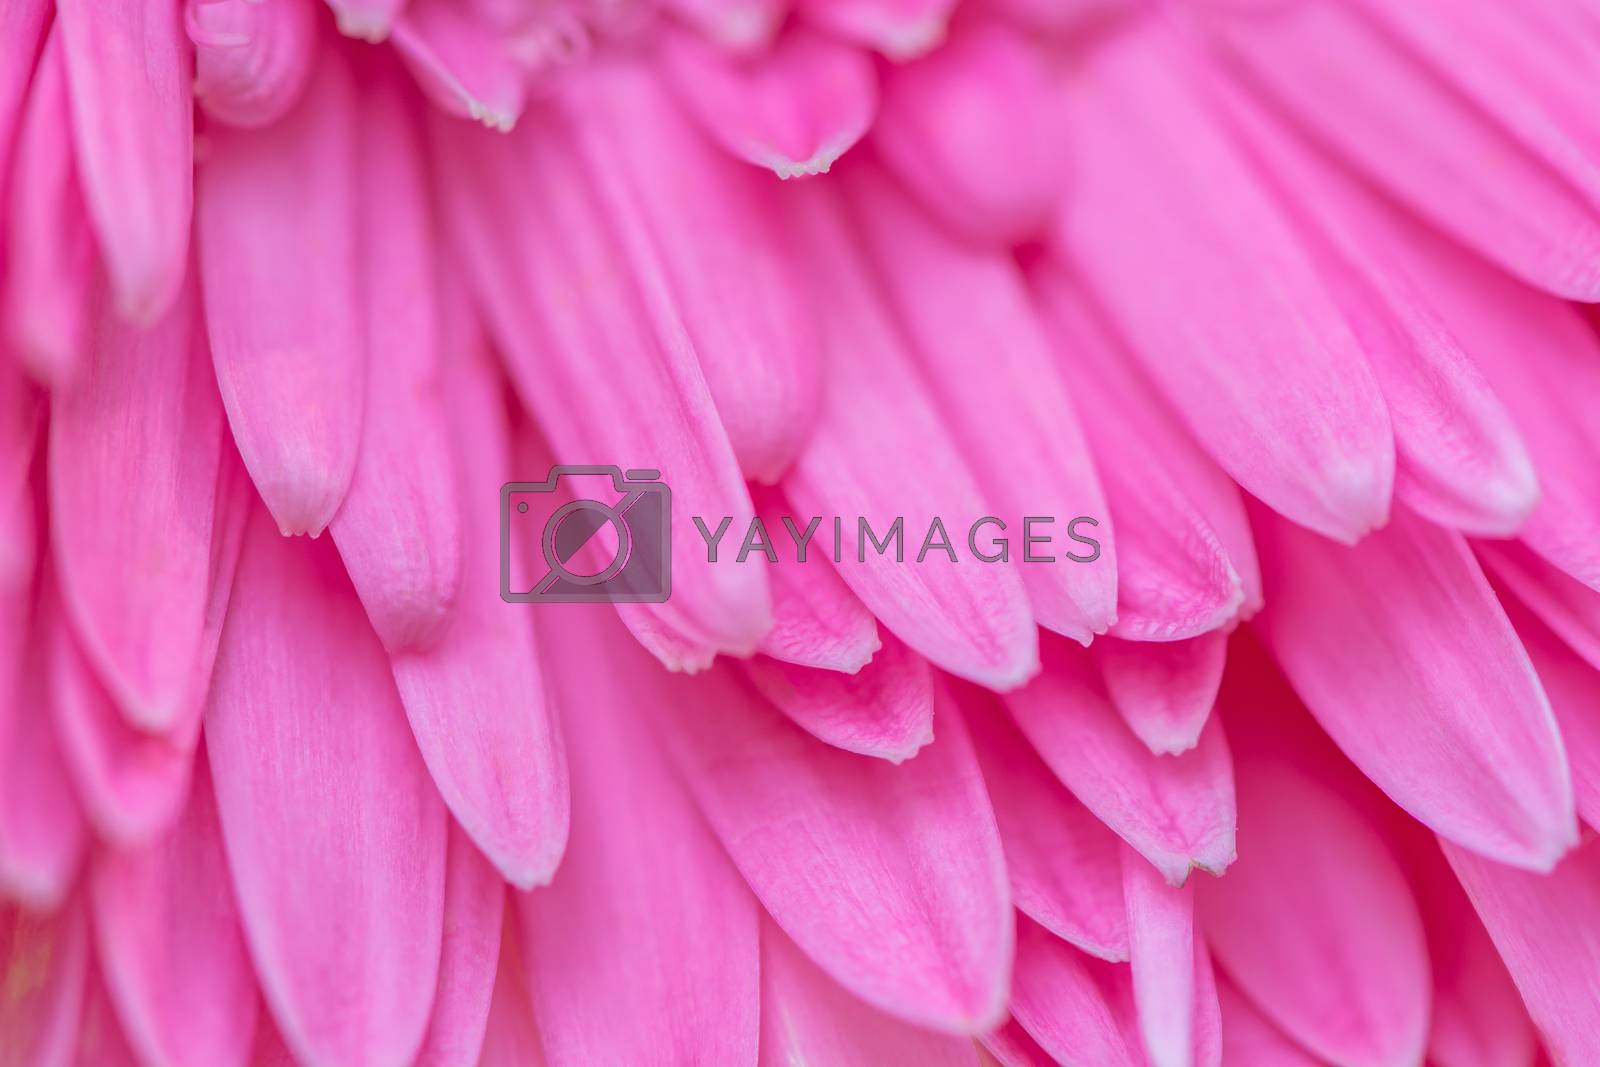 Royalty free image of pink gerbera petal by panuruangjan